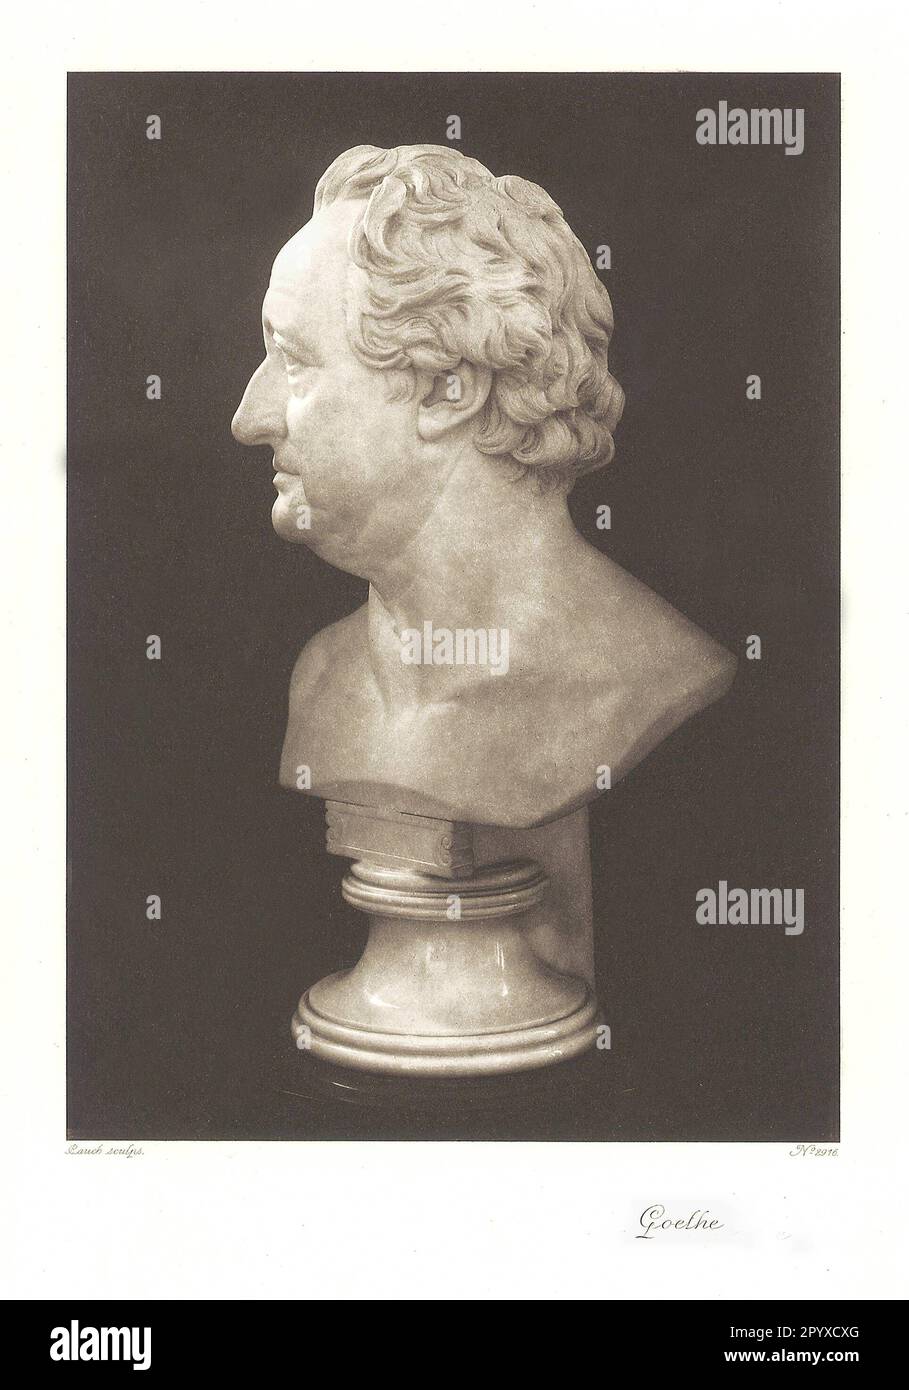 Johann Wolfgang von Goethe (1749-1832), poeta tedesco. Busto di marmo di Christian Daniel Rauch dal 1820. Foto: Heliogravure, Corpus Imaginum, Hanfstaengl Collection. [traduzione automatica] Foto Stock